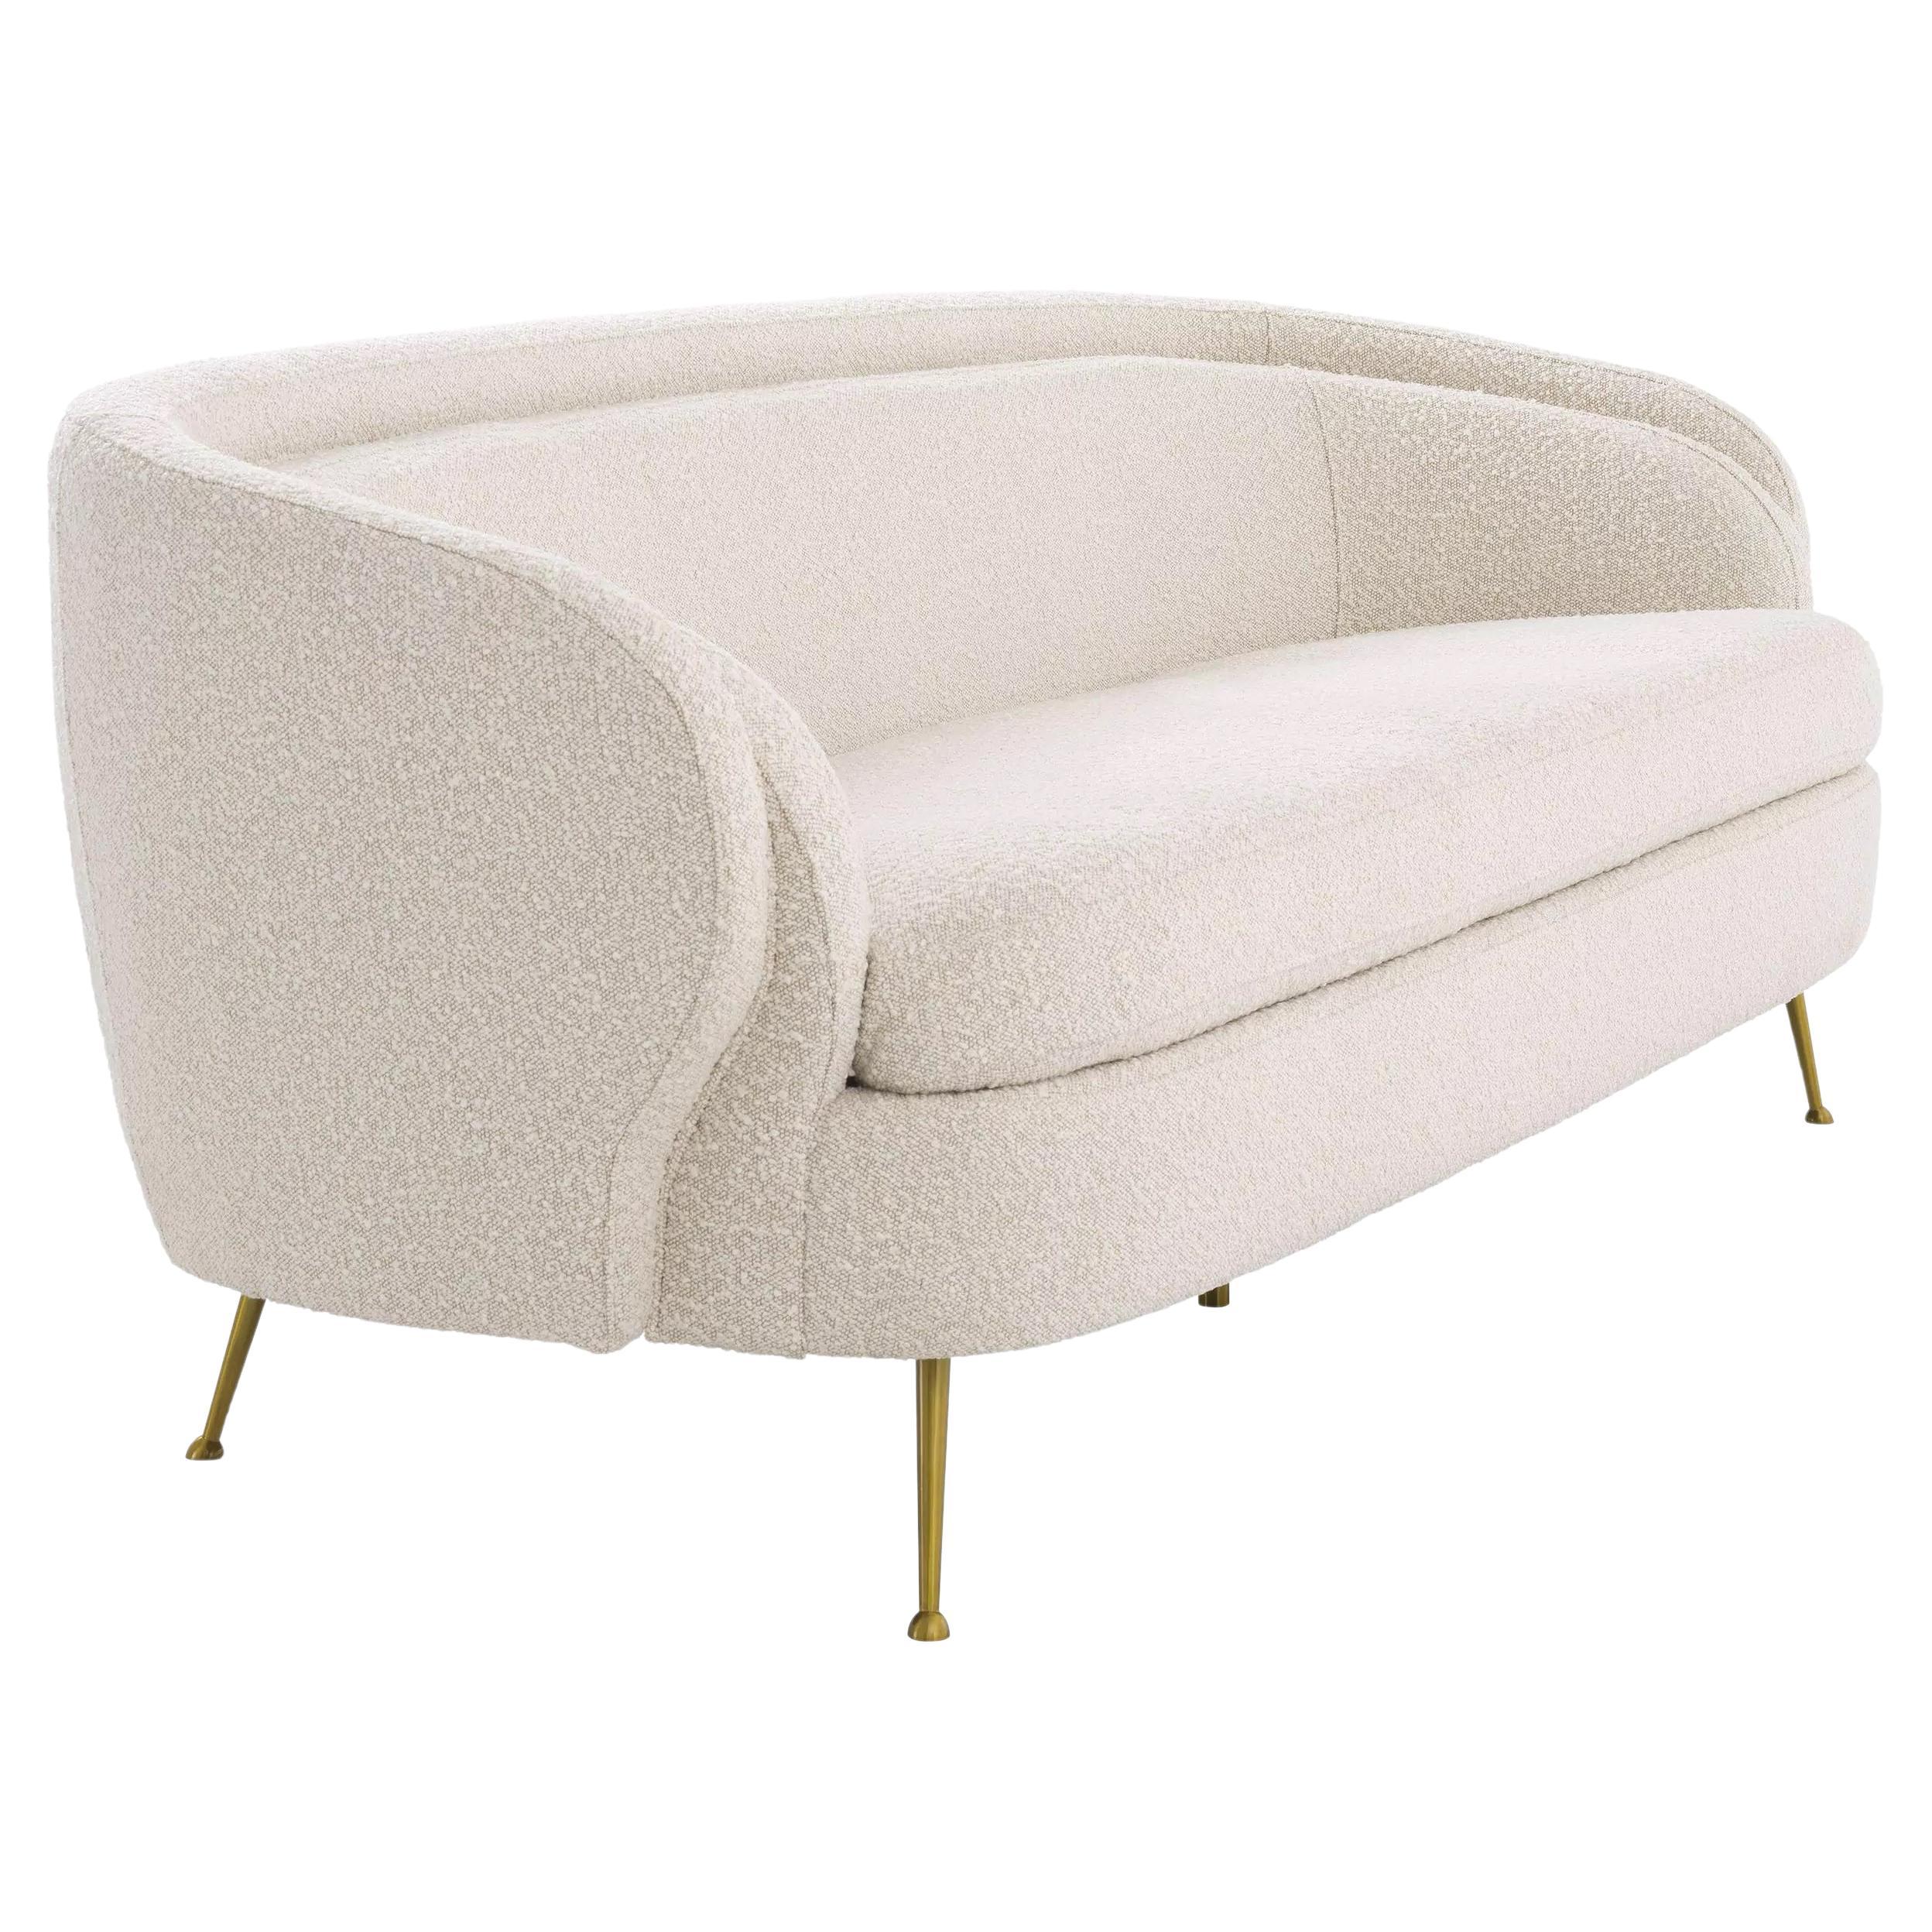 1950s Italian Design Style Bouclé Fabric And Brass Feet Sofa